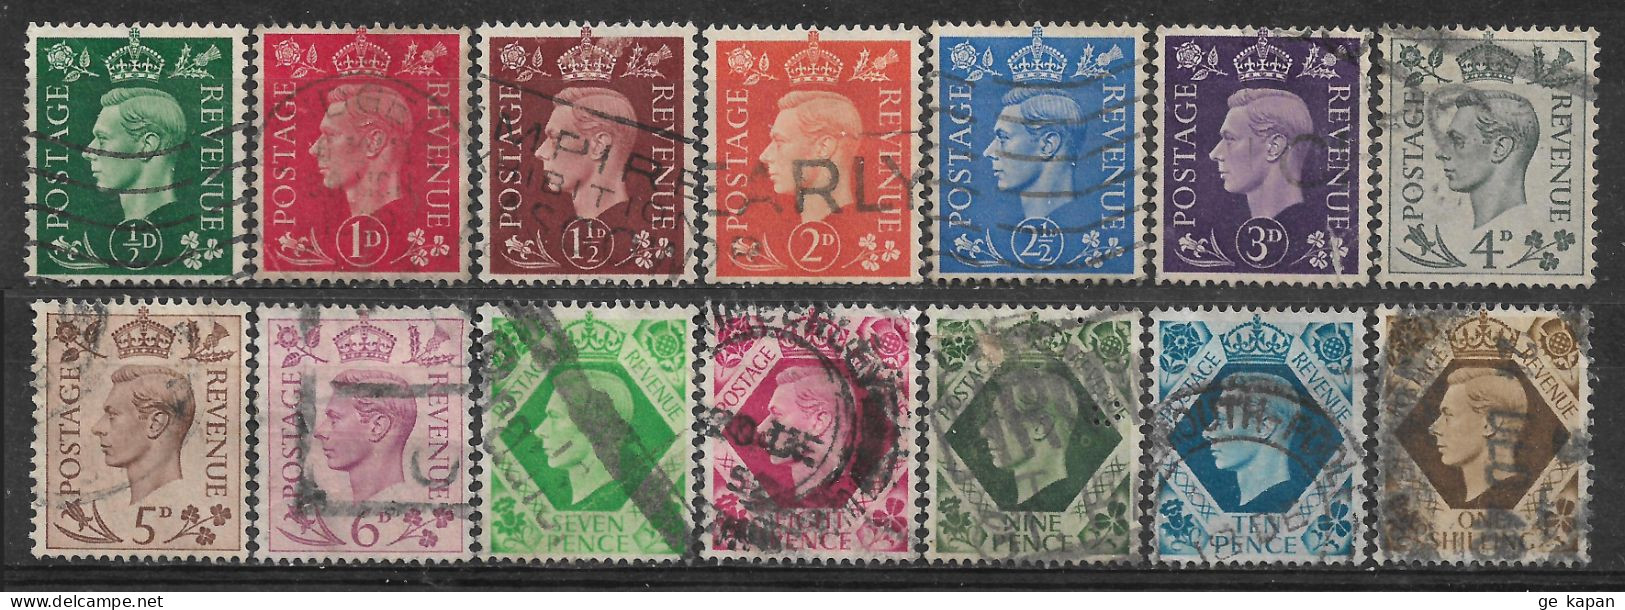 1937-1939 GREAT BRITAIN Complete Set Of 14 Used Stamps (Scott # 235-248) CV $9.10 - Usados